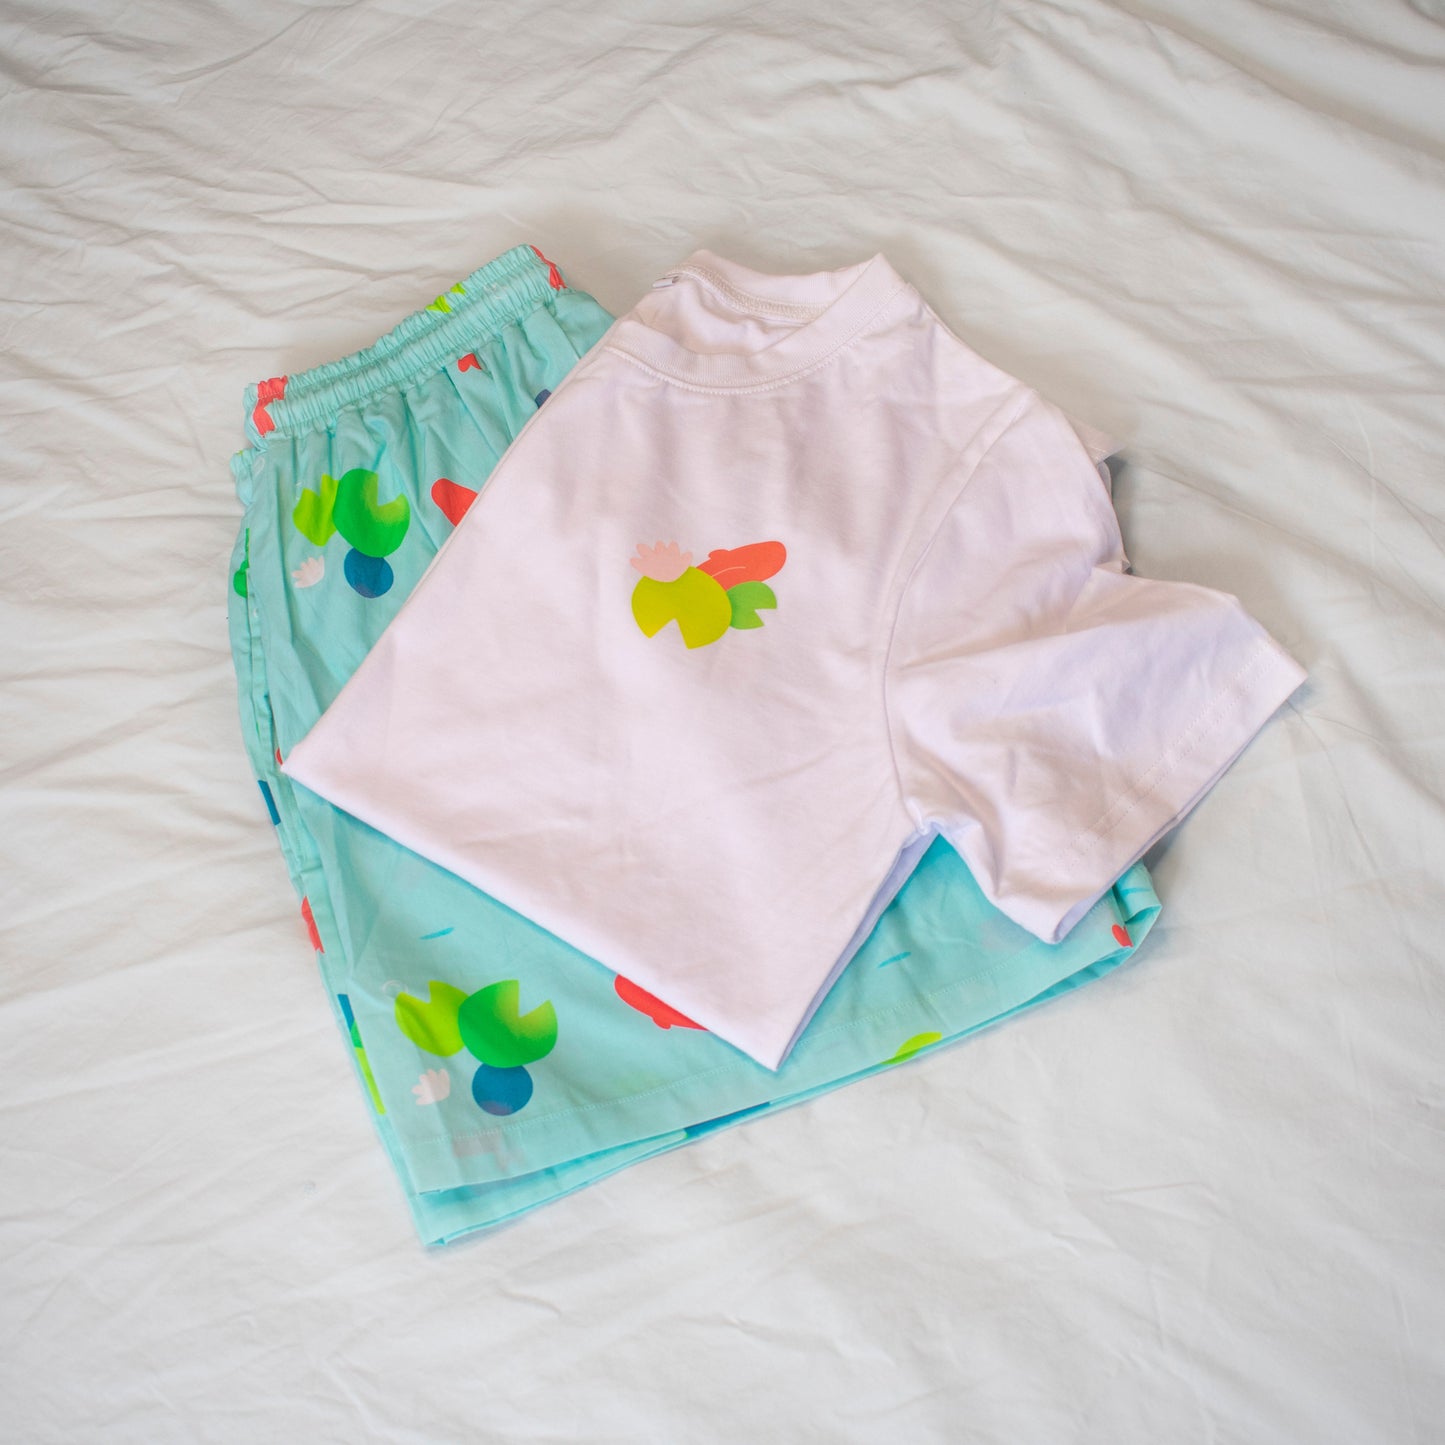 Fishpond Pyjamas top